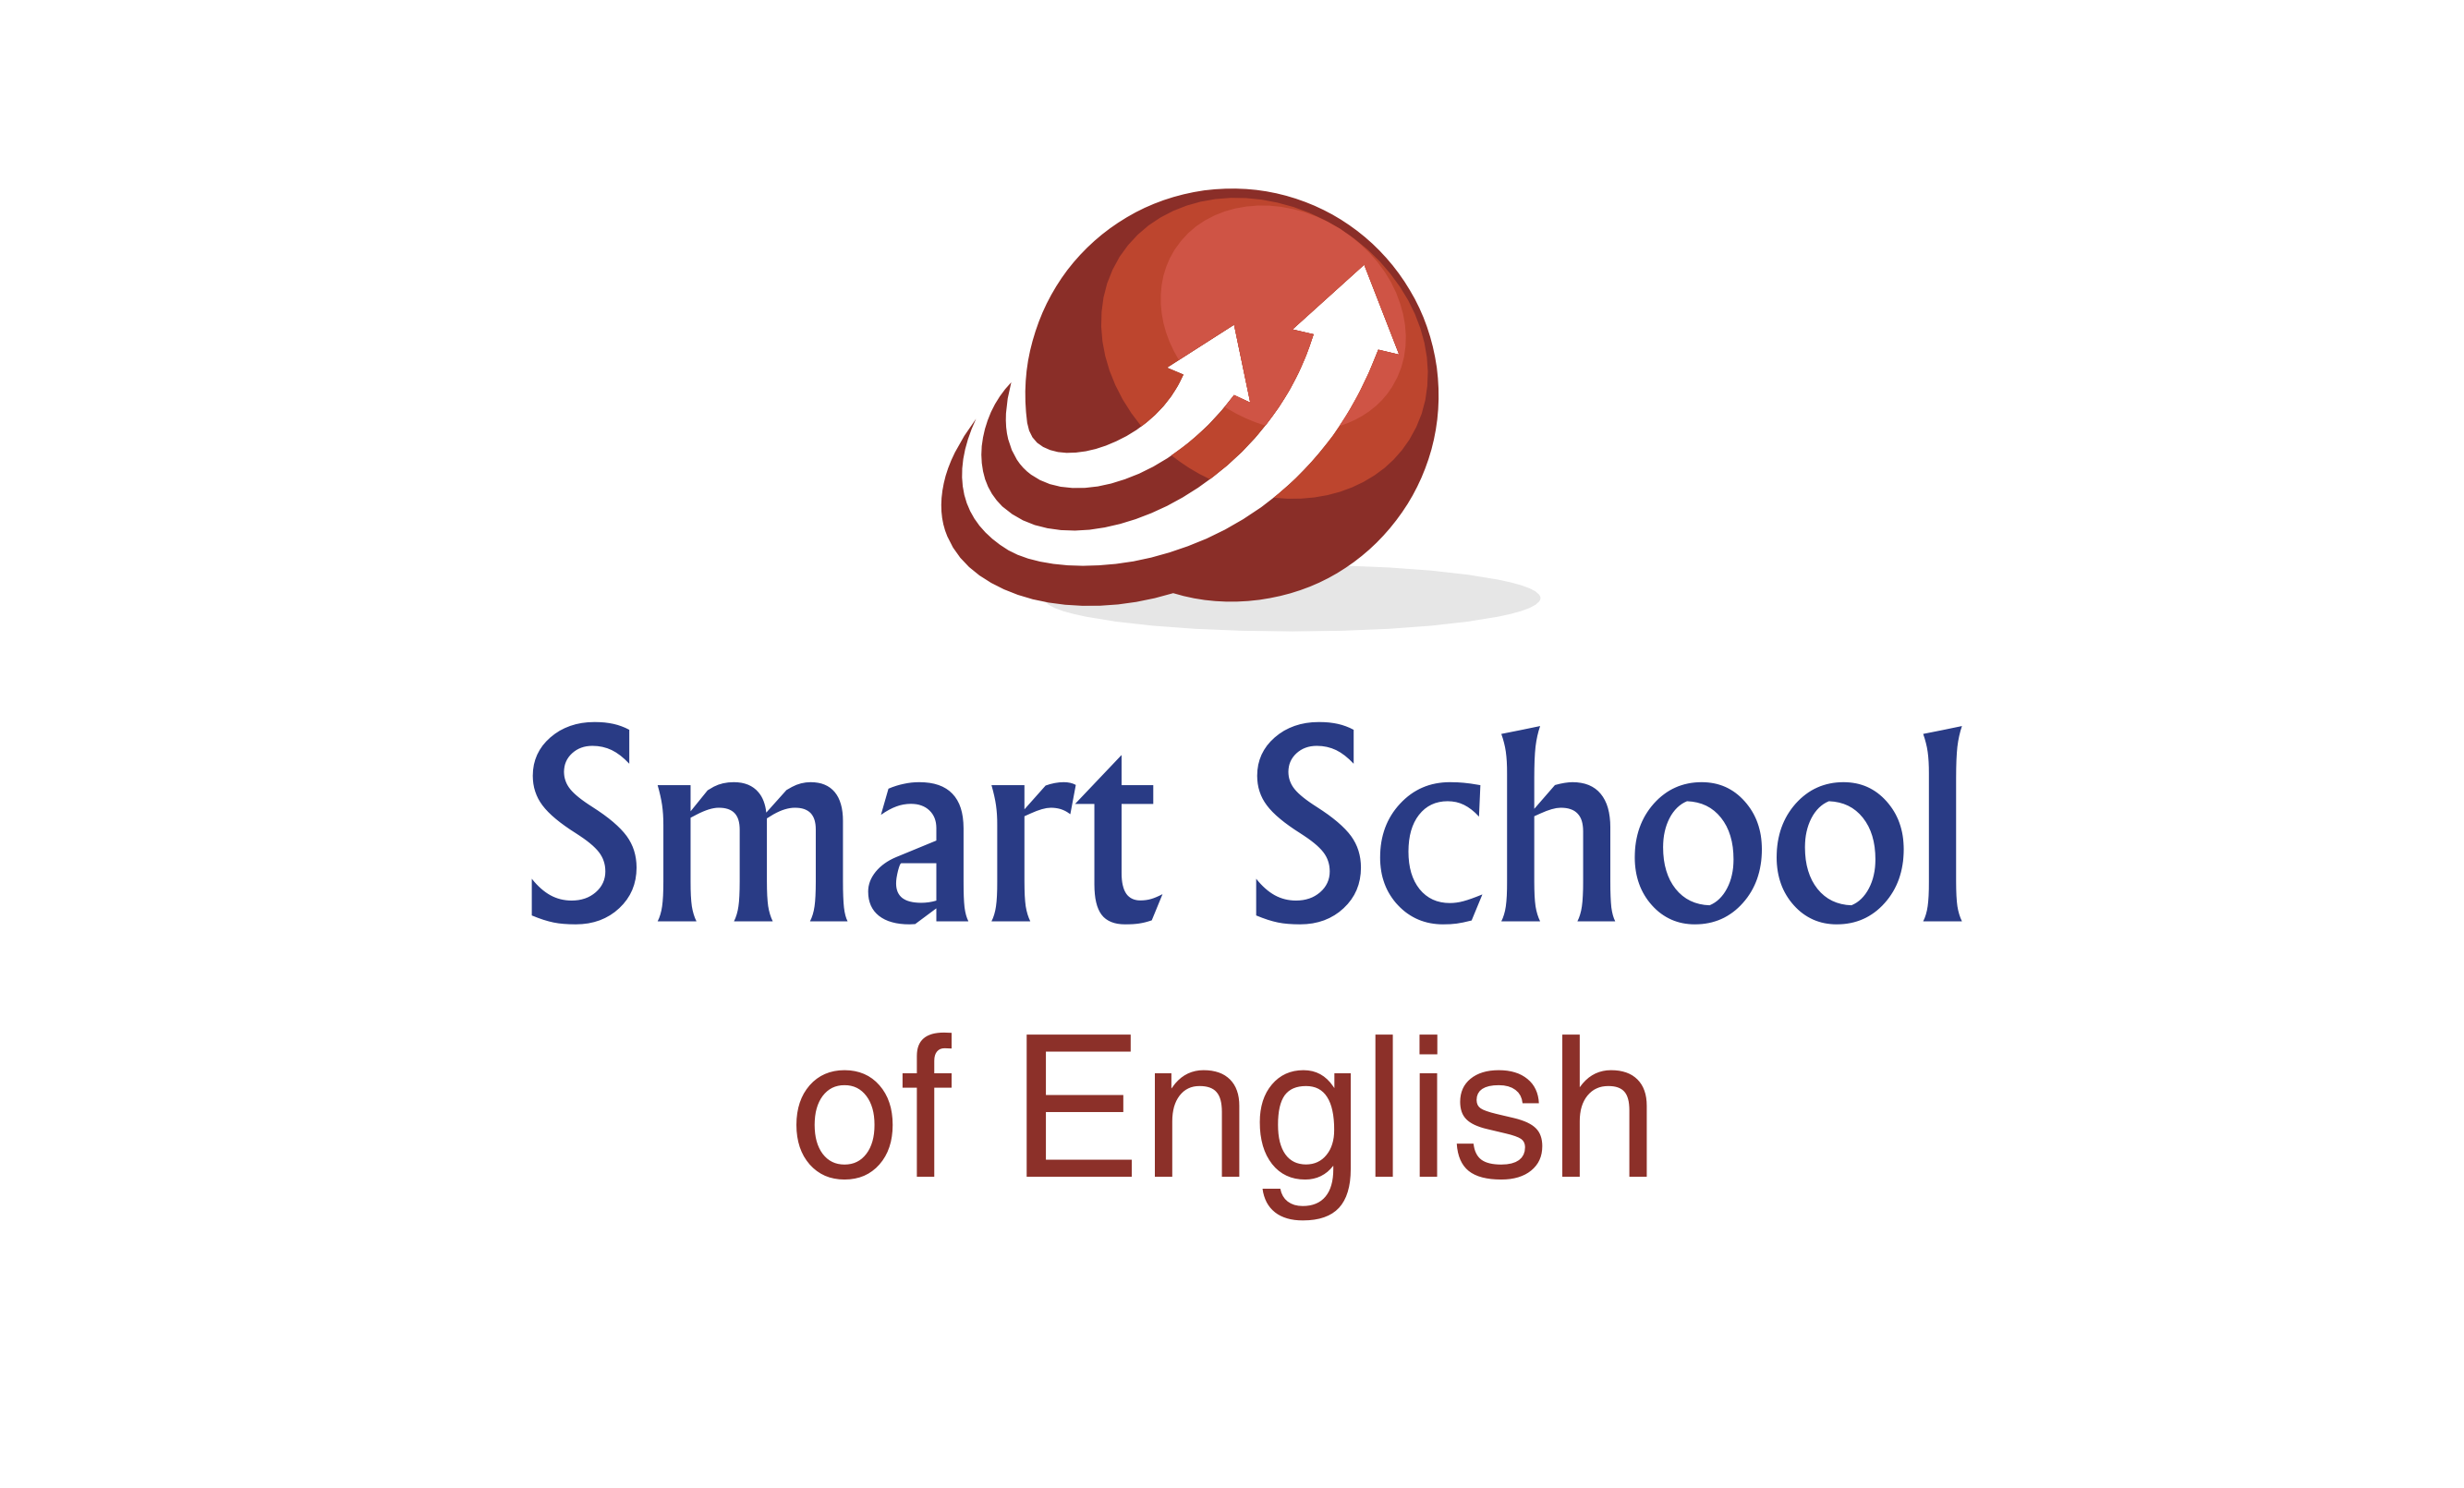 Smart school of English